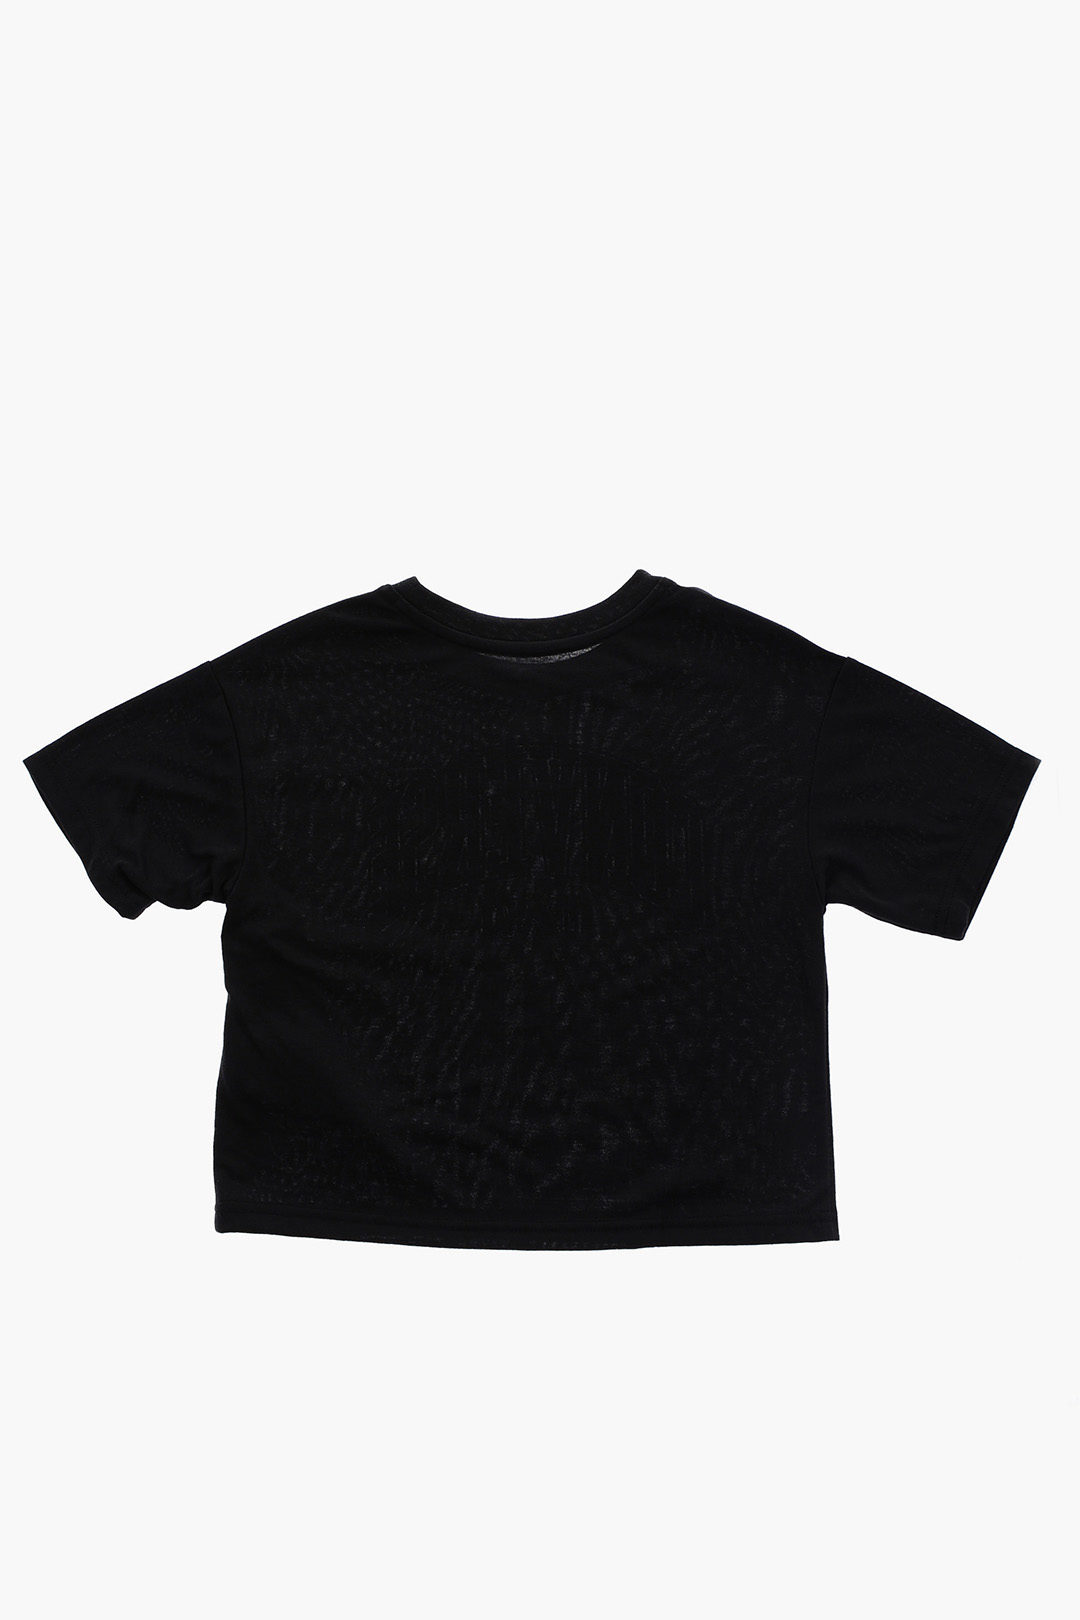 Converse KIDS ALL STAR CHUCK TAYLOR Scrunchie And Crop T-shirt Set girls - Outlet